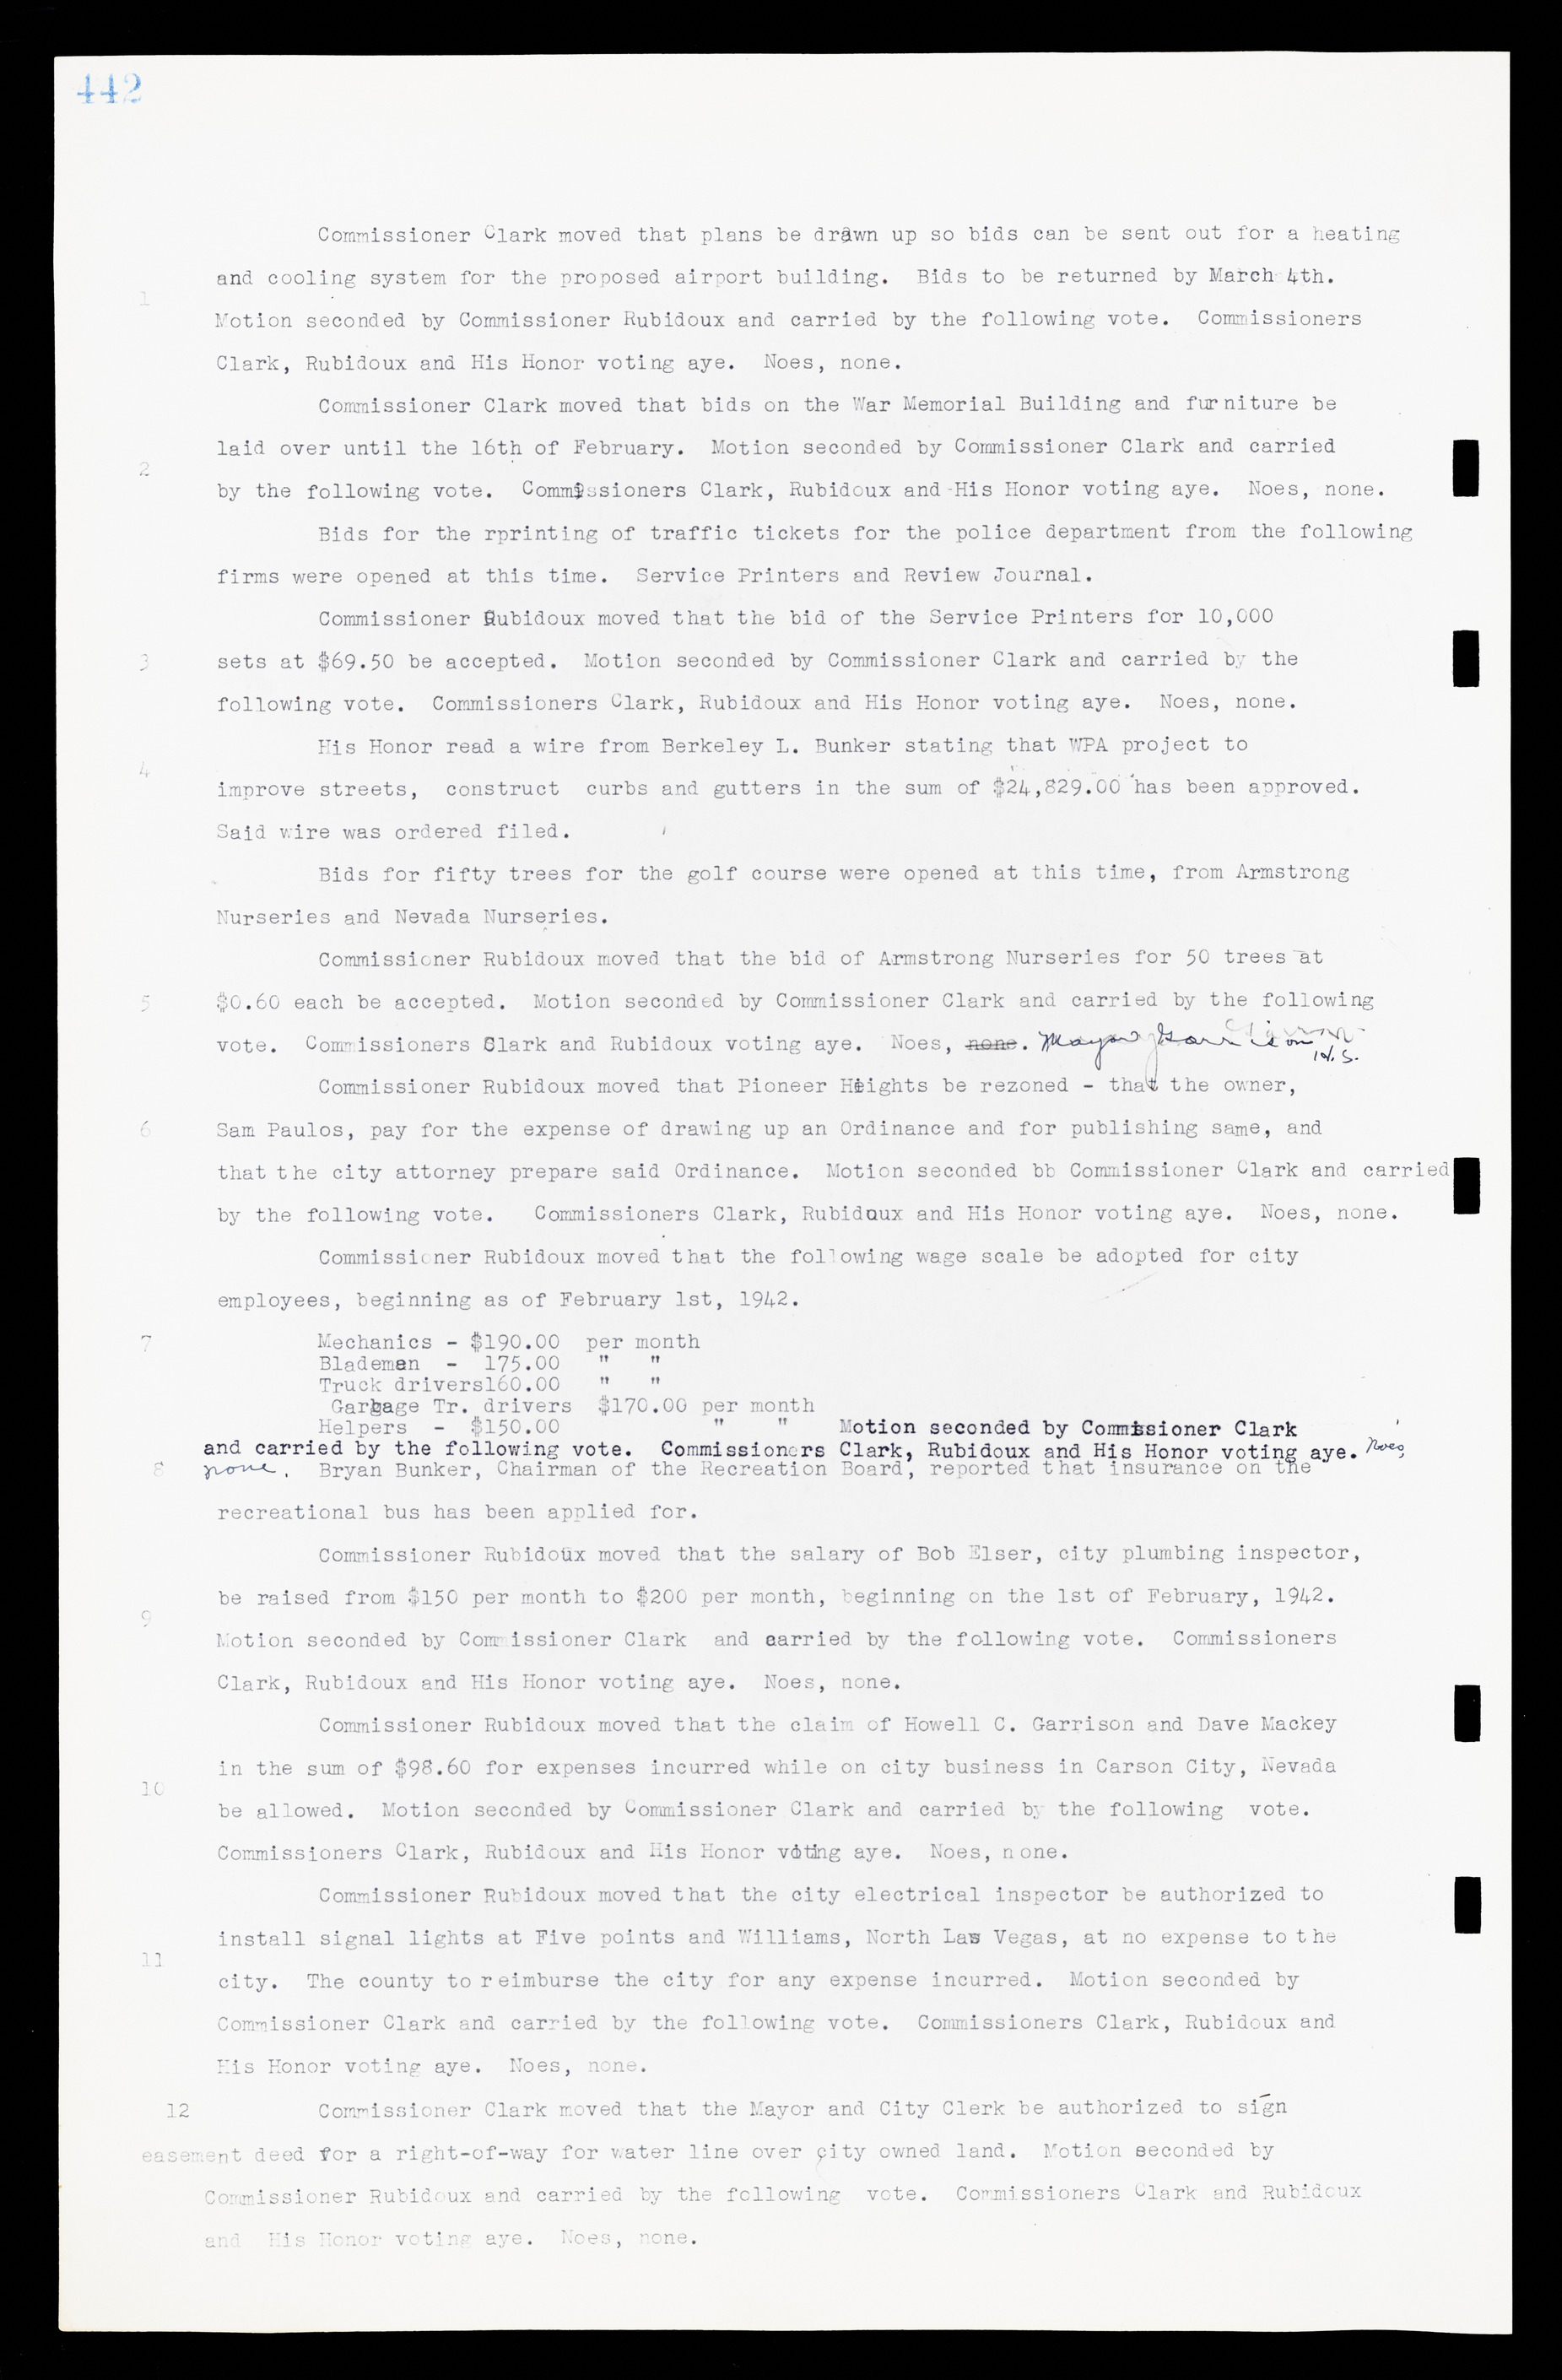 Las Vegas City Commission Minutes, February 17, 1937 to August 4, 1942, lvc000004-470